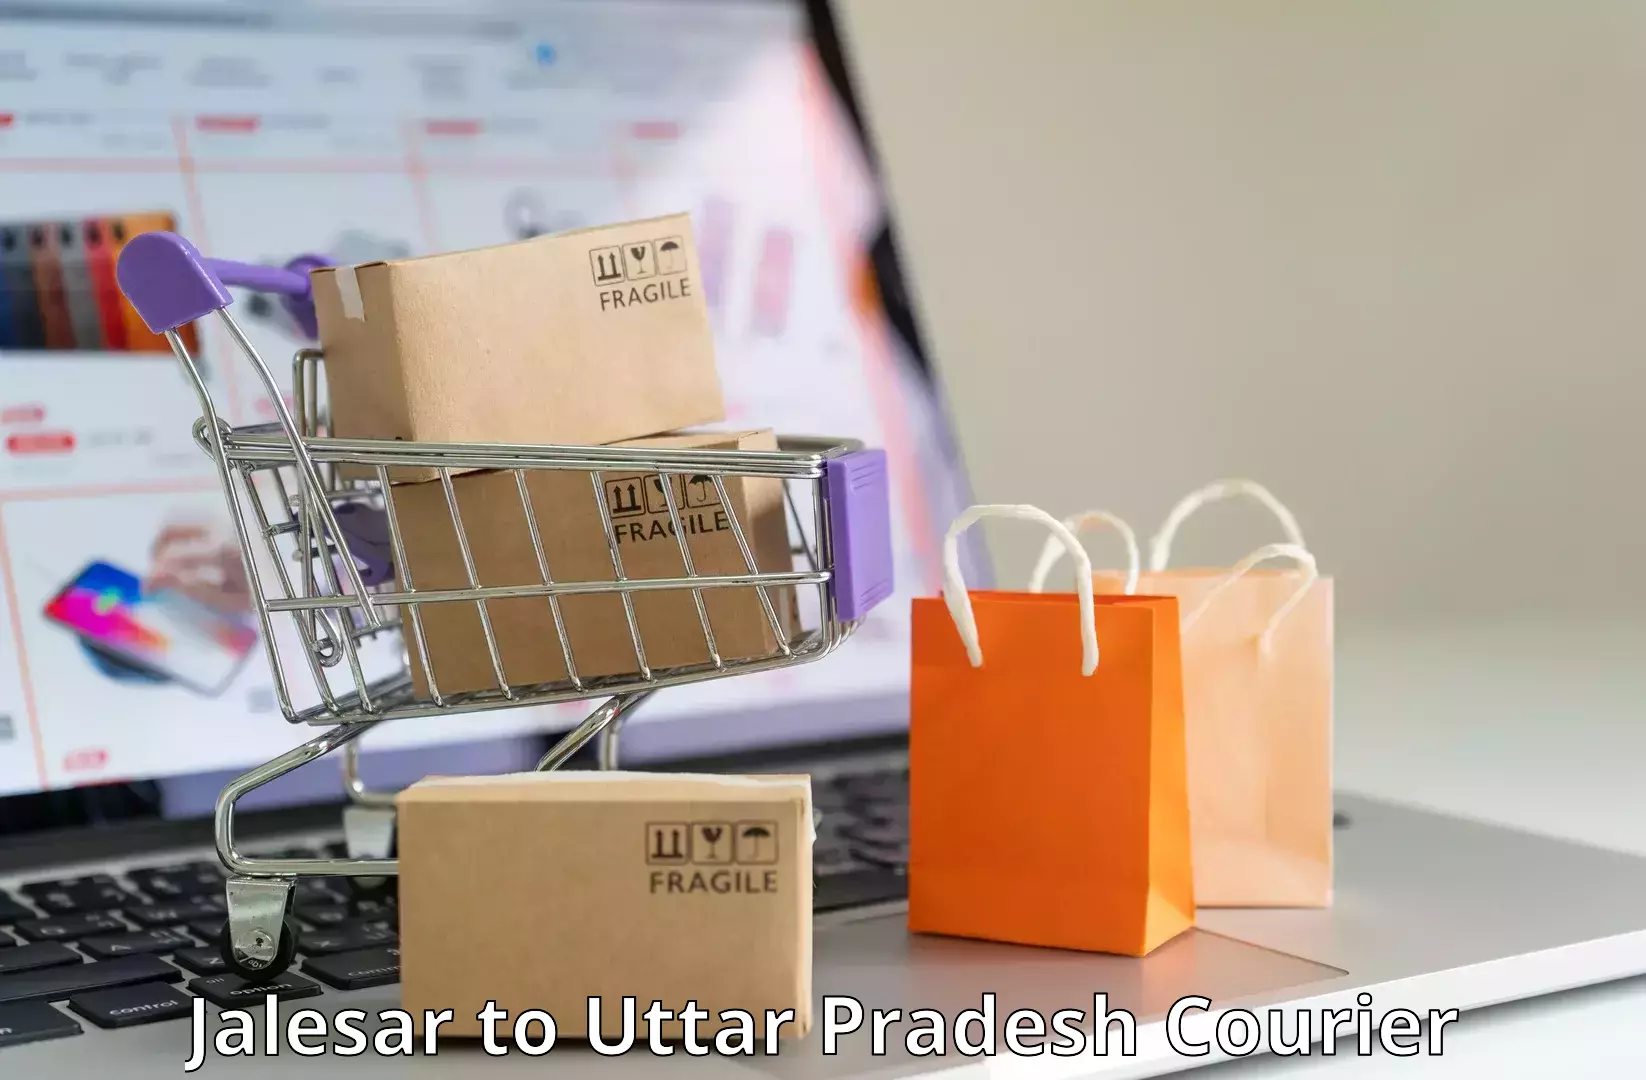 Package tracking Jalesar to Uttar Pradesh